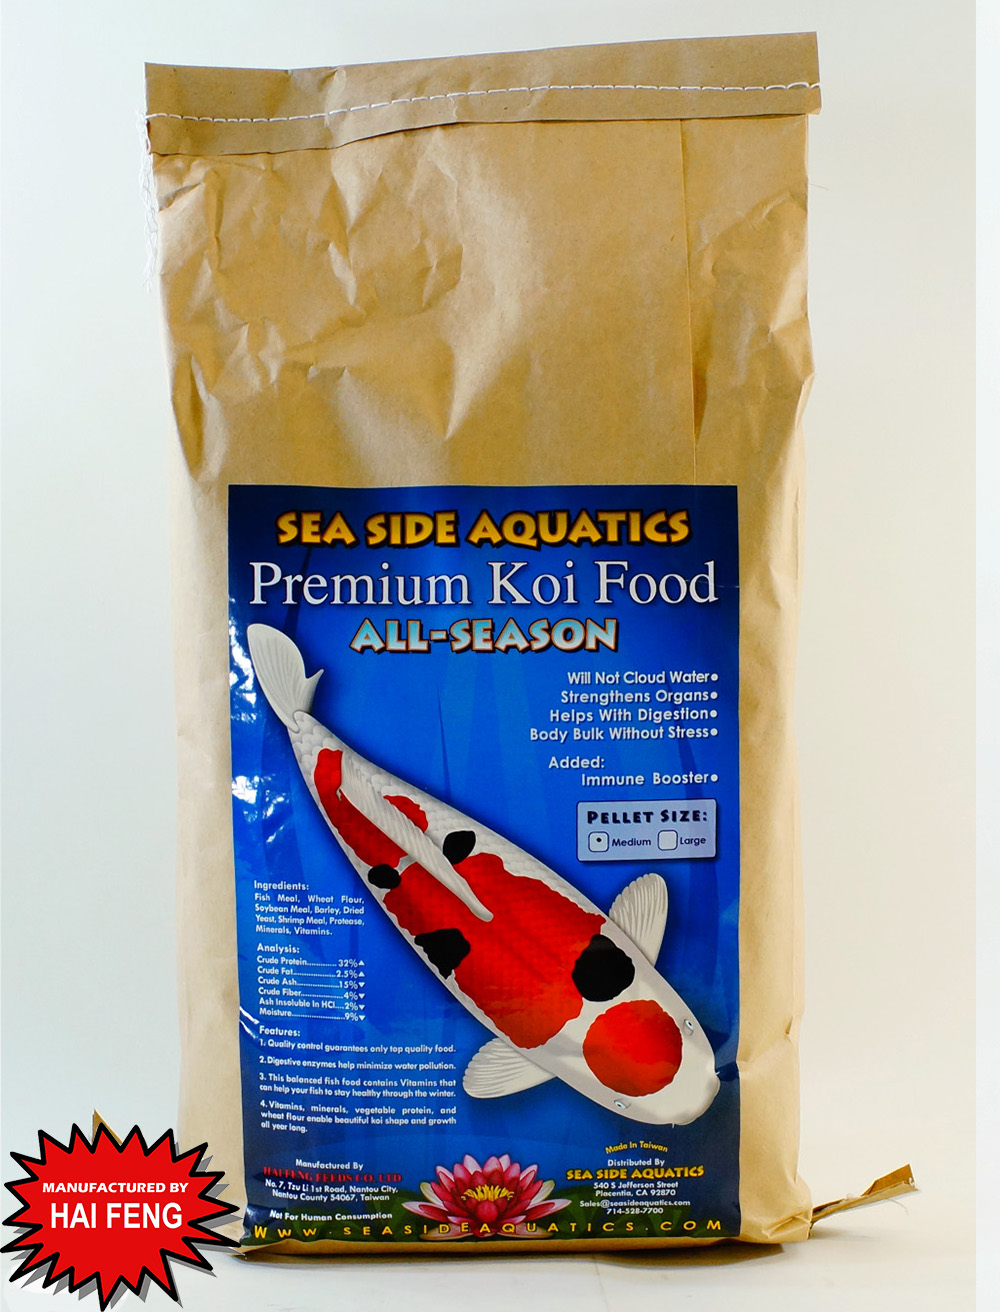 SeaSide Aquatics Made By Hai Feng All Season Koi Food 5kg Large